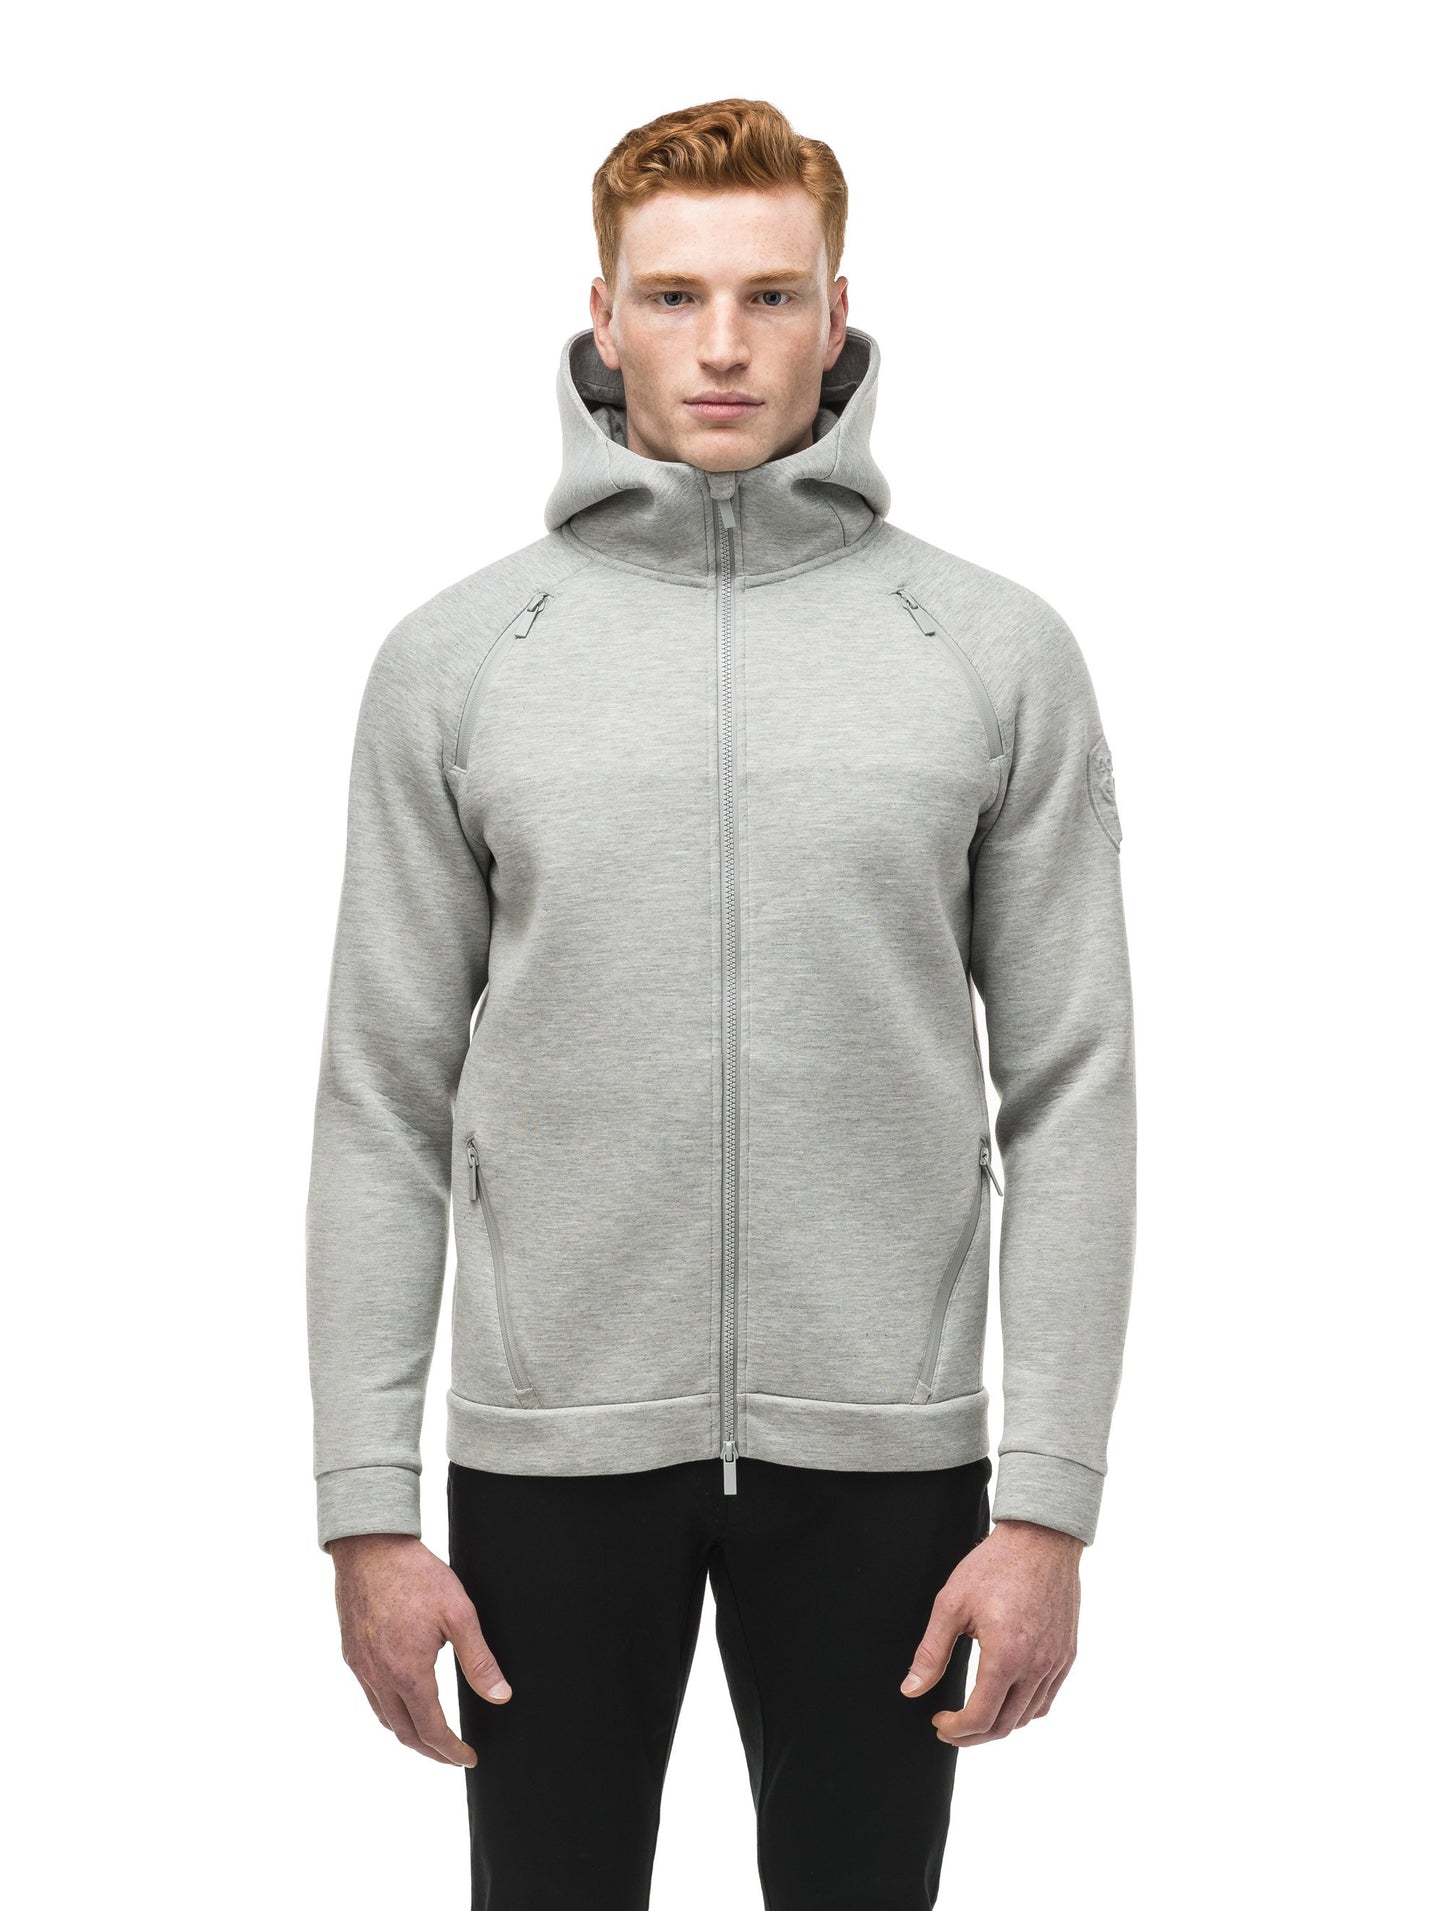 Men's premium rayon polyamide bonded jersey fabrication hoodie with exposed zipper in Grey Melange